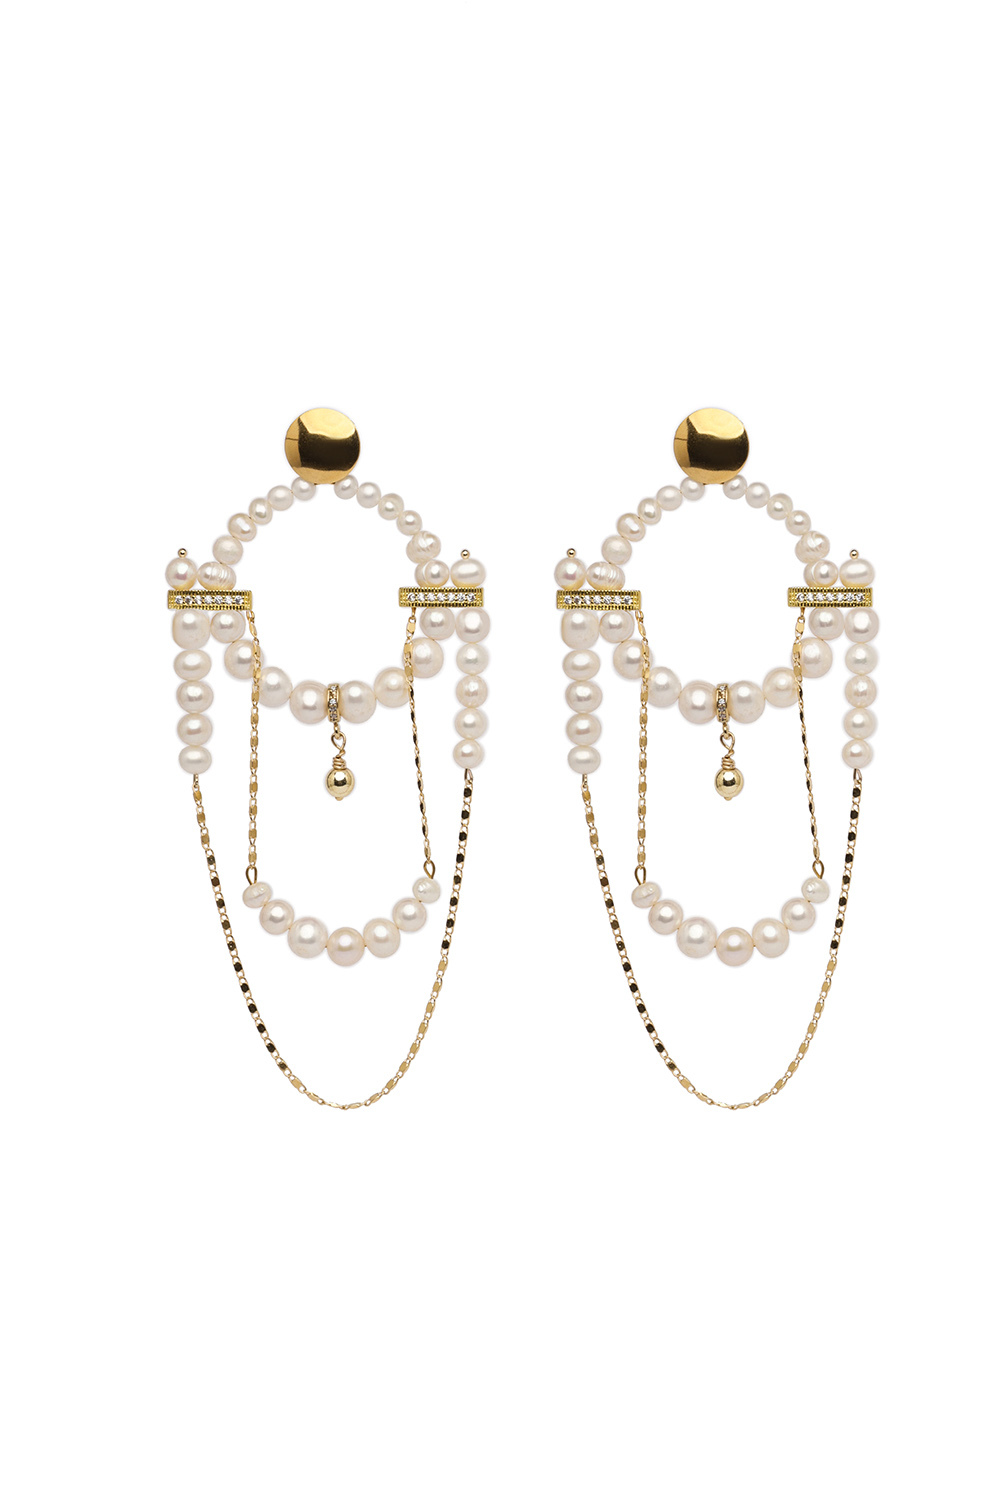 Main earrings with pearls (Grains de Verre) EMPZ2